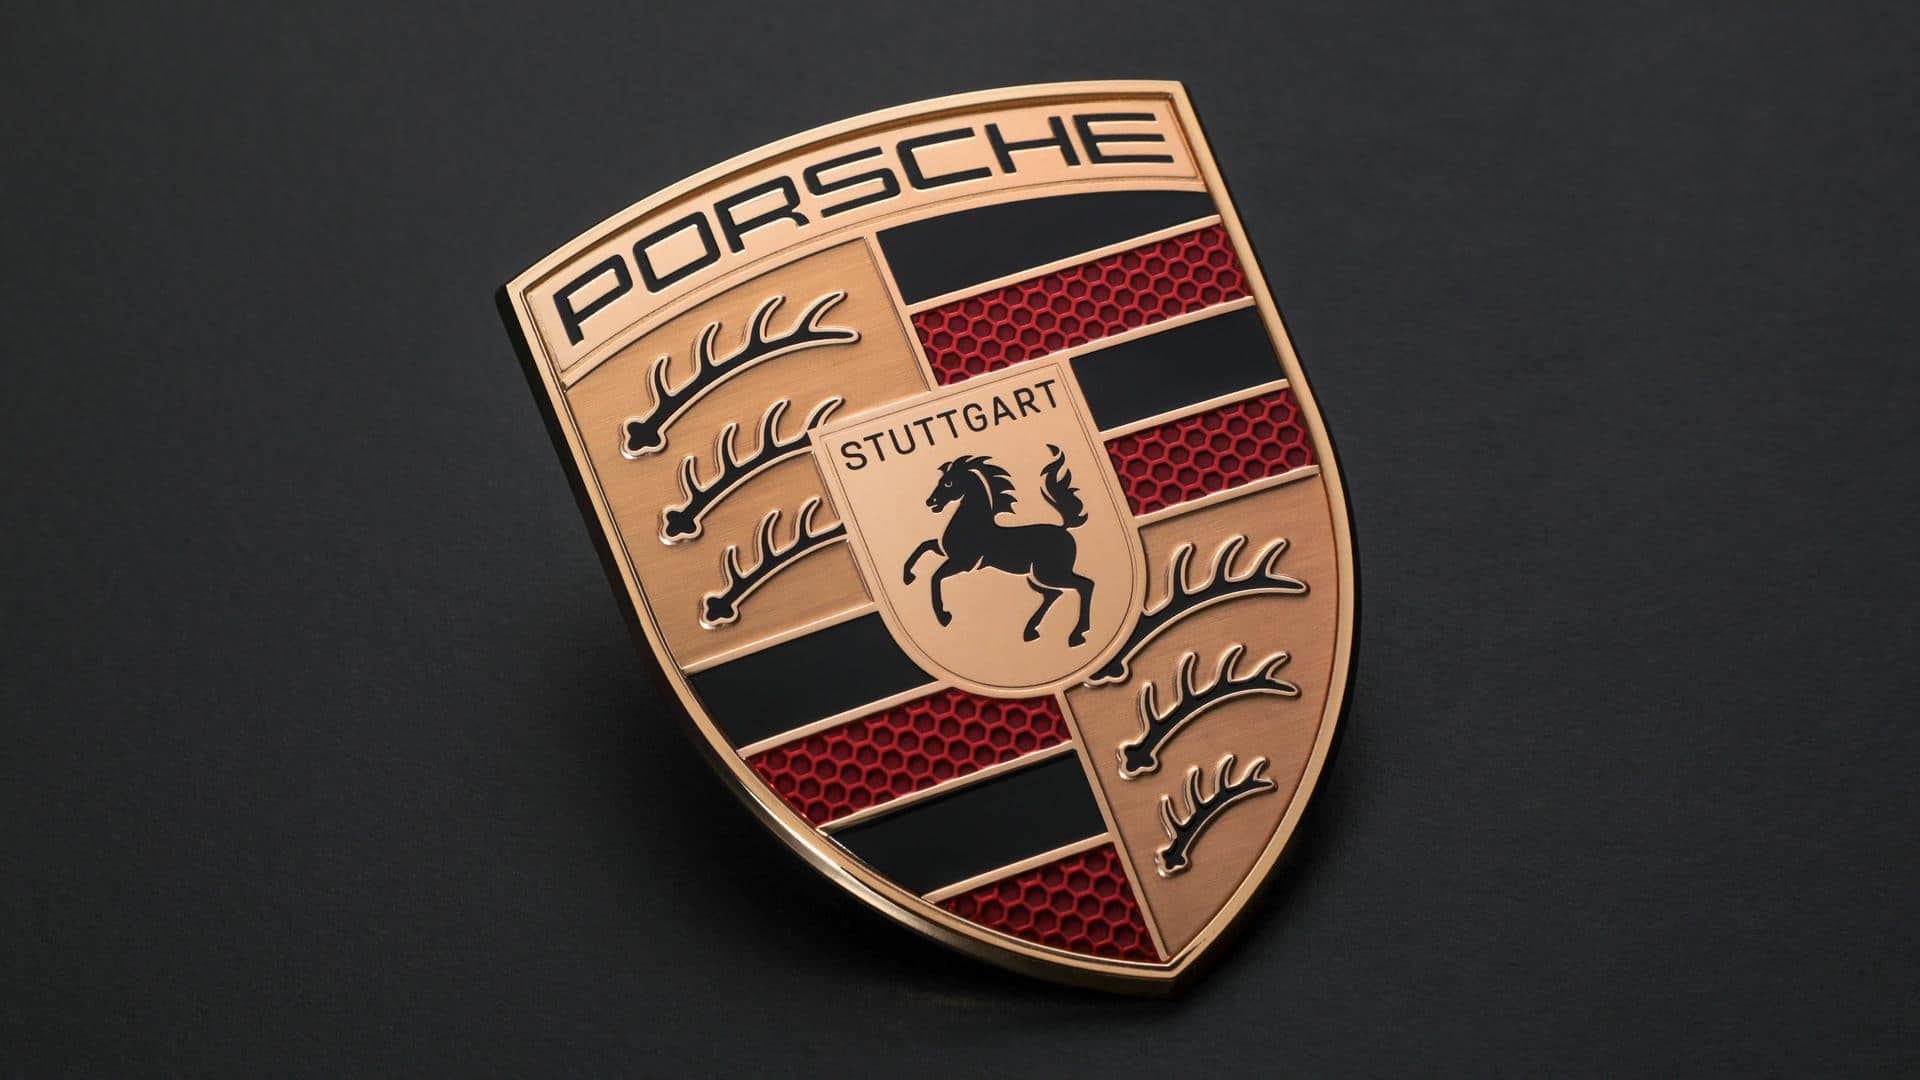 Porsche's crest gets tweaked: History of the legendary moniker explained